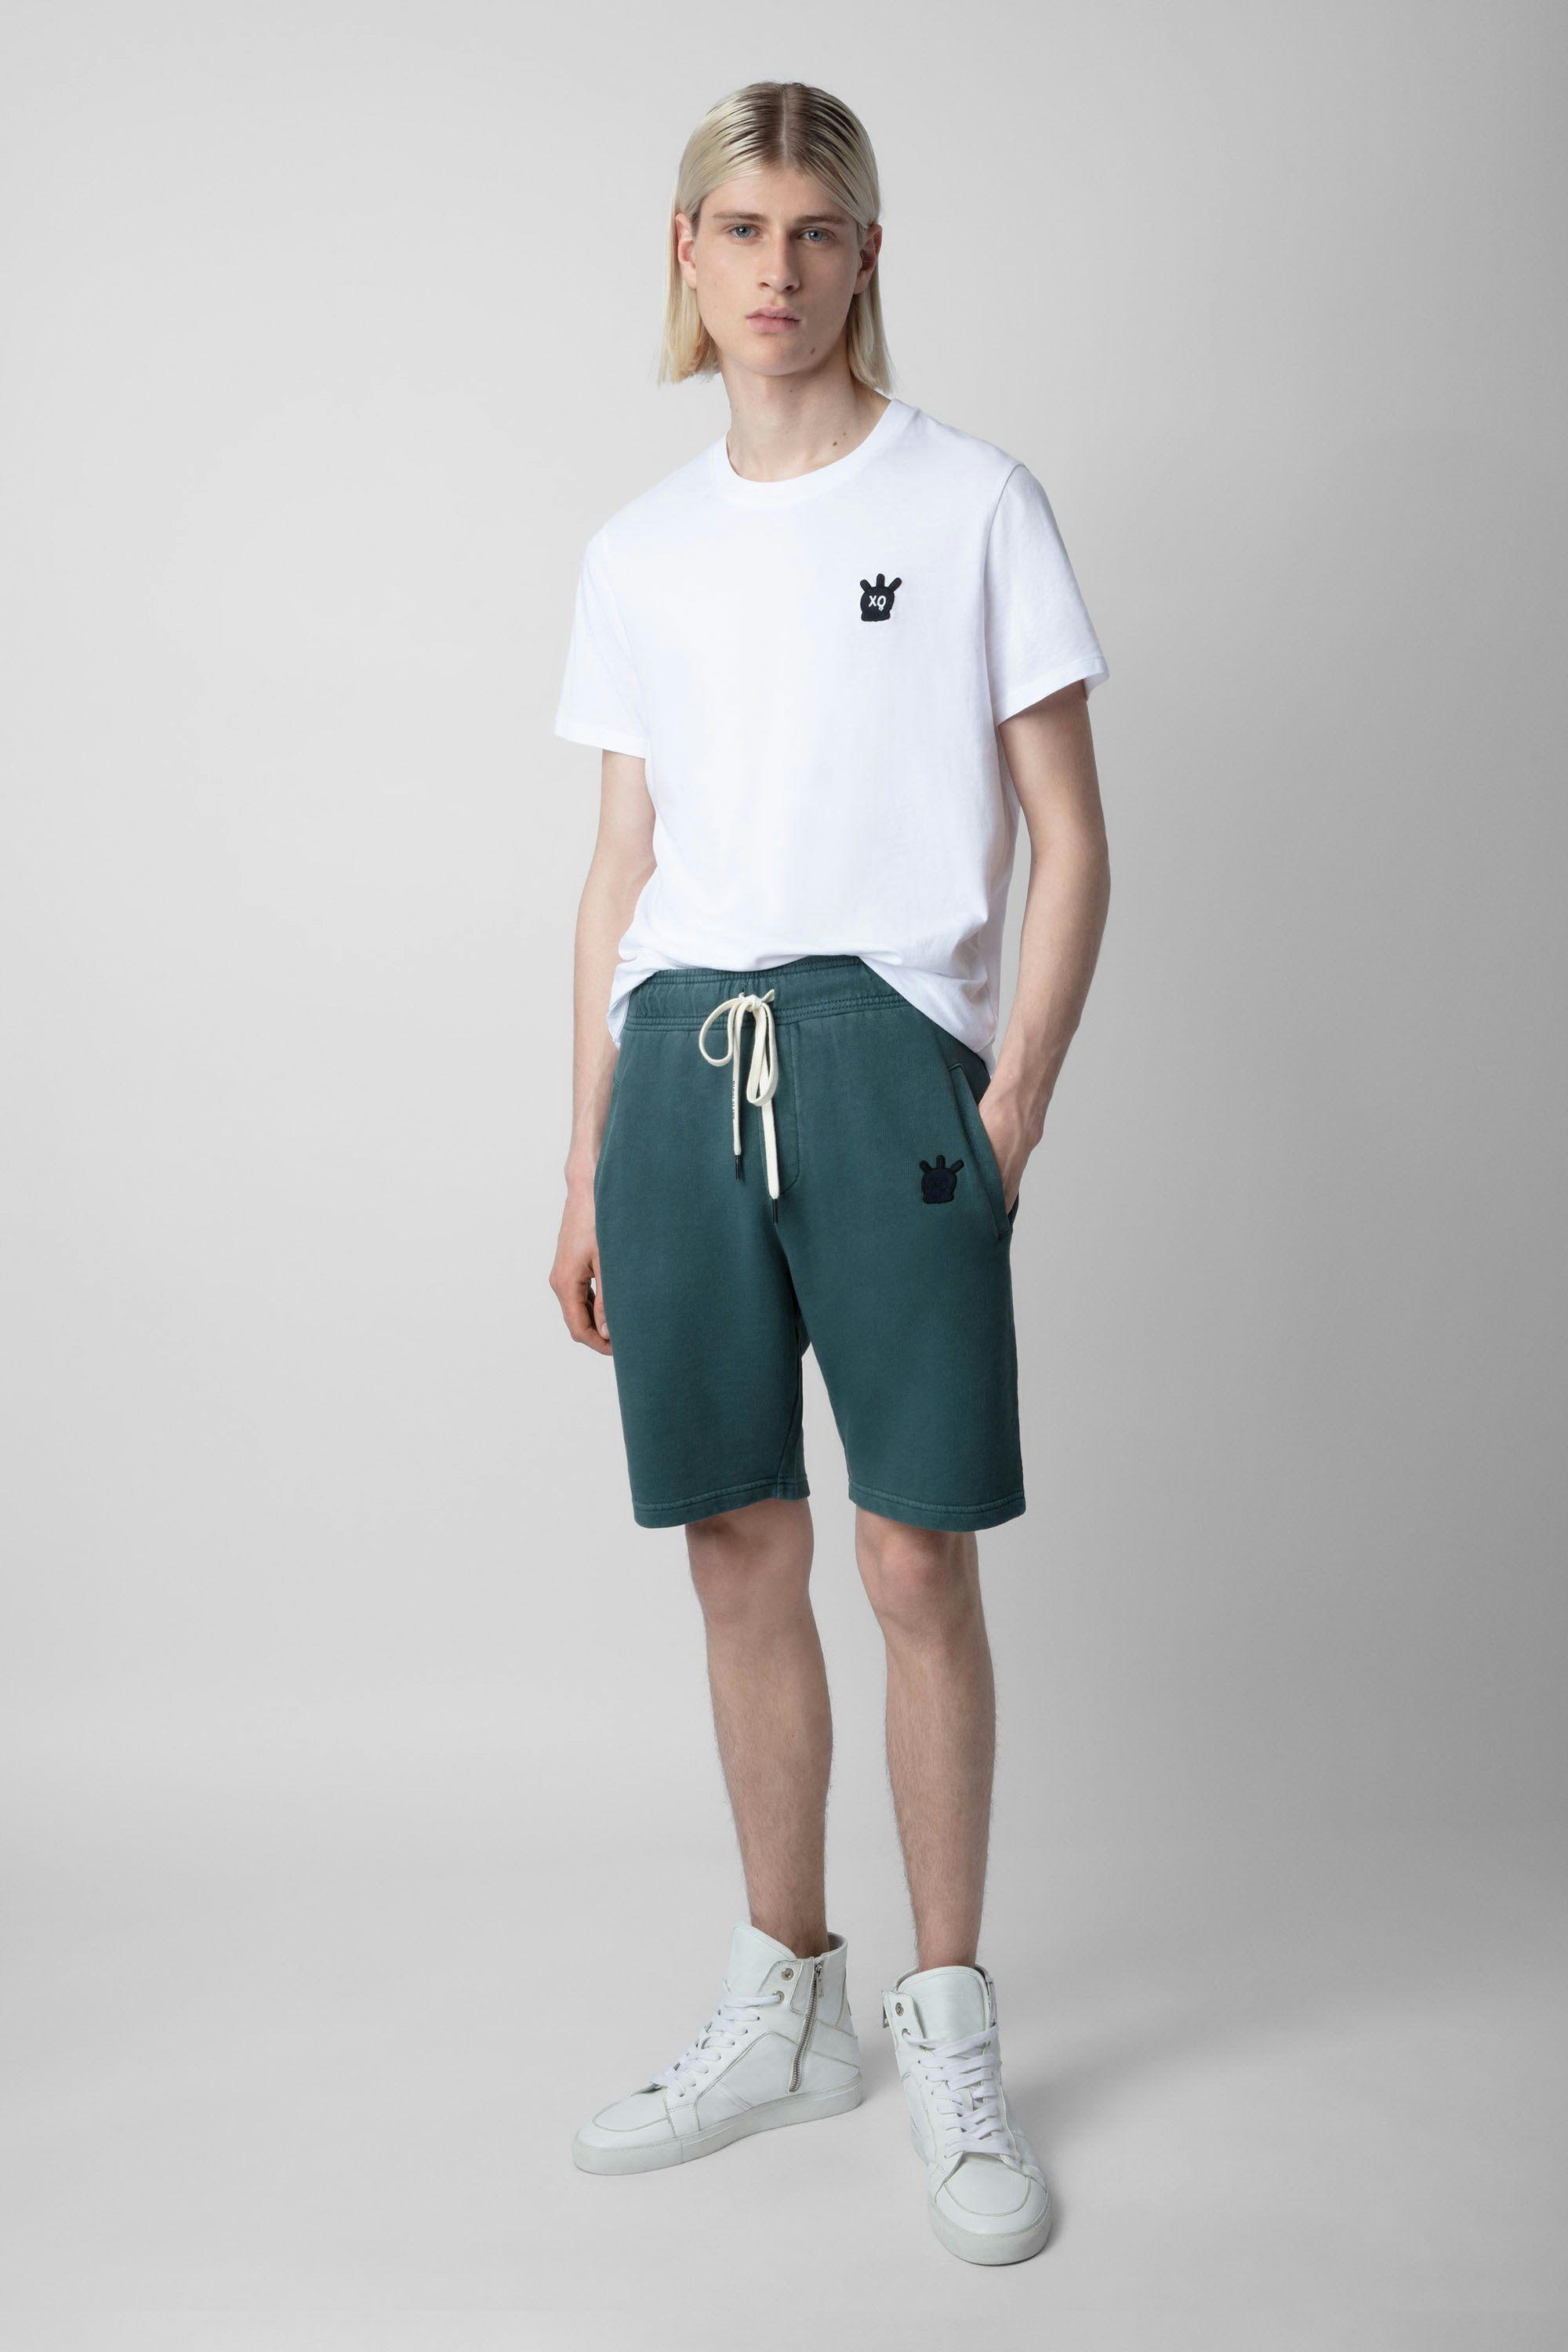 Party Skull Shorts - Men’s dark green cotton fleece shorts featuring a Skull XO patch.